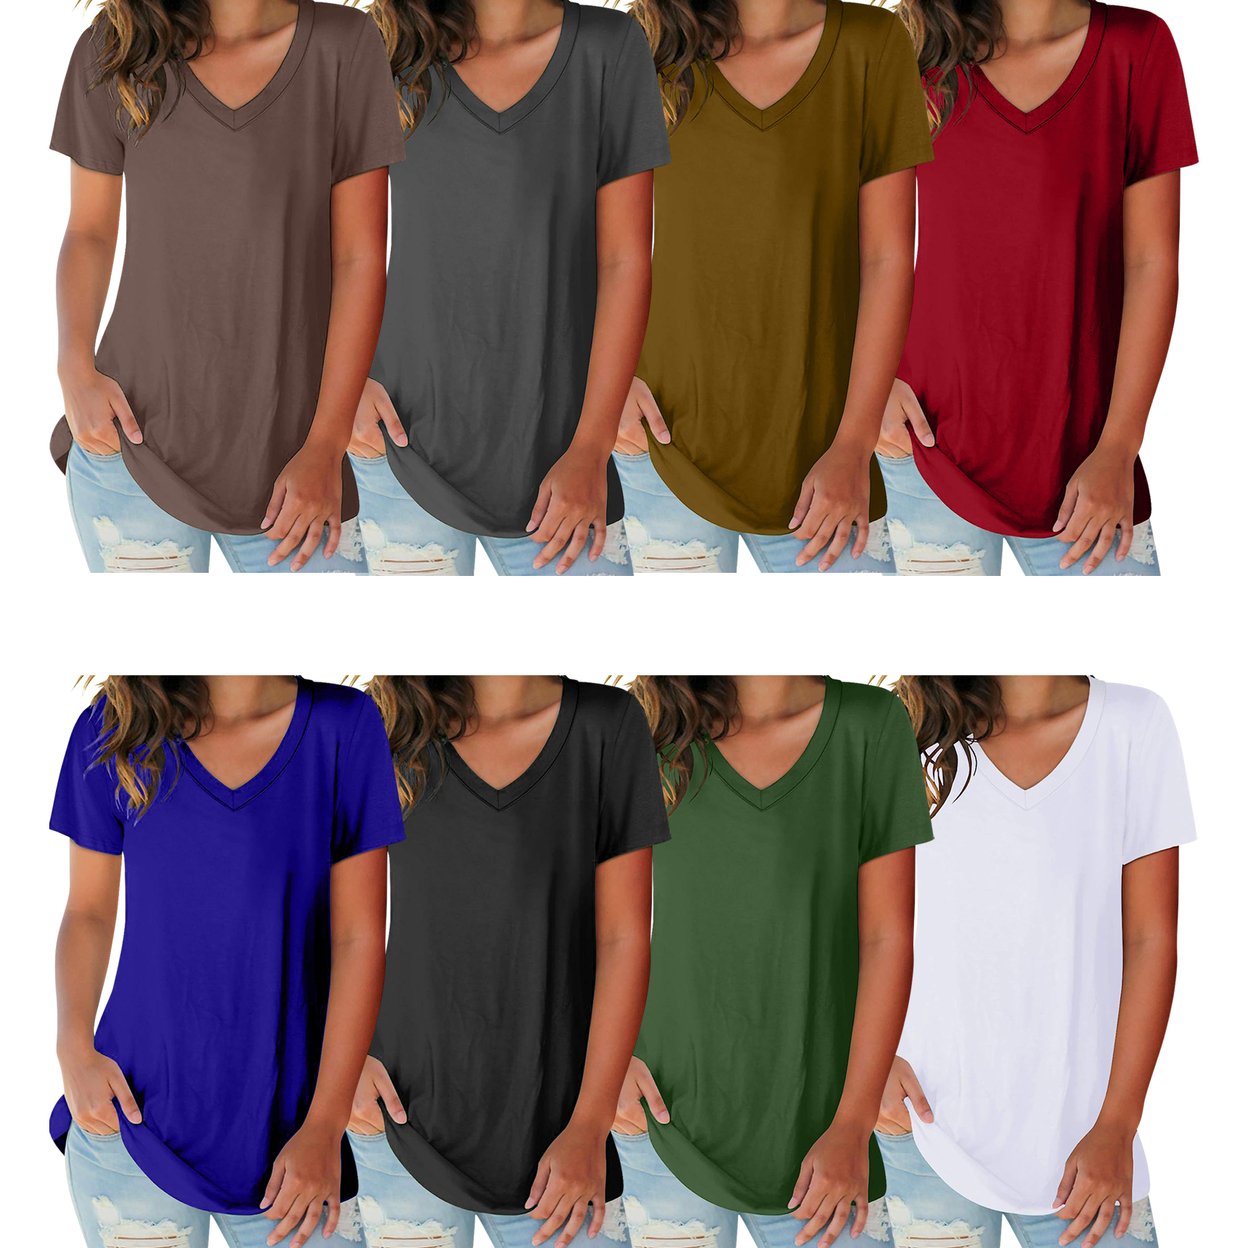 3-Pack: Women's Ultra Soft Smooth Cotton Blend Basic V-Neck Short Sleeve Shirts - Black, Navy, Green, Xx-large